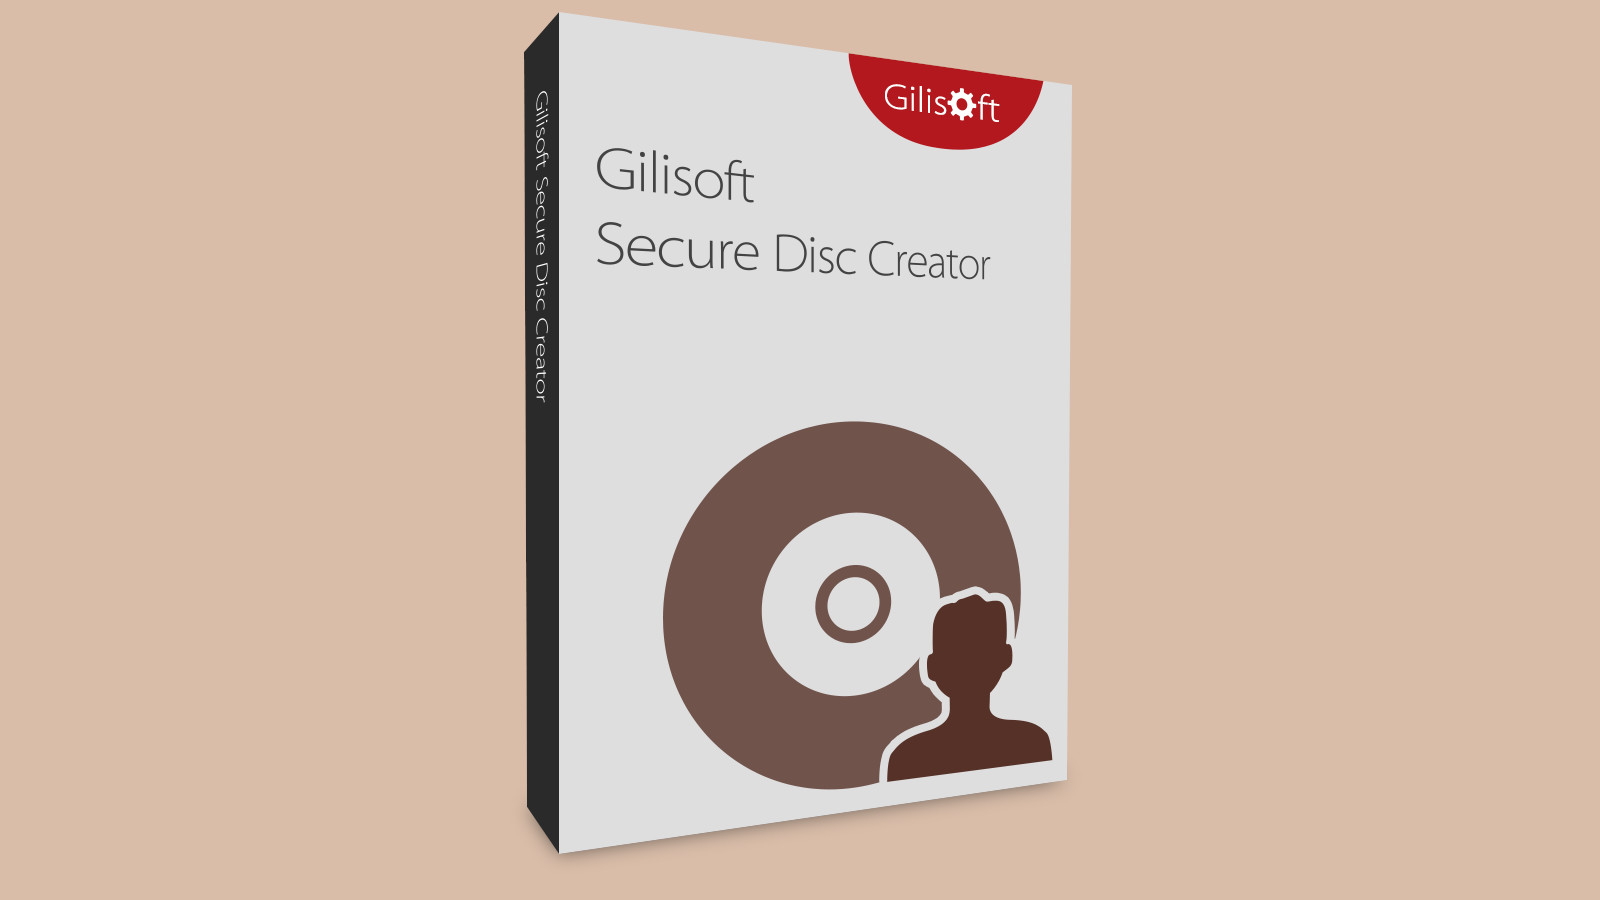 Gilisoft Secure Disc Creator CD Key, 6.84 usd